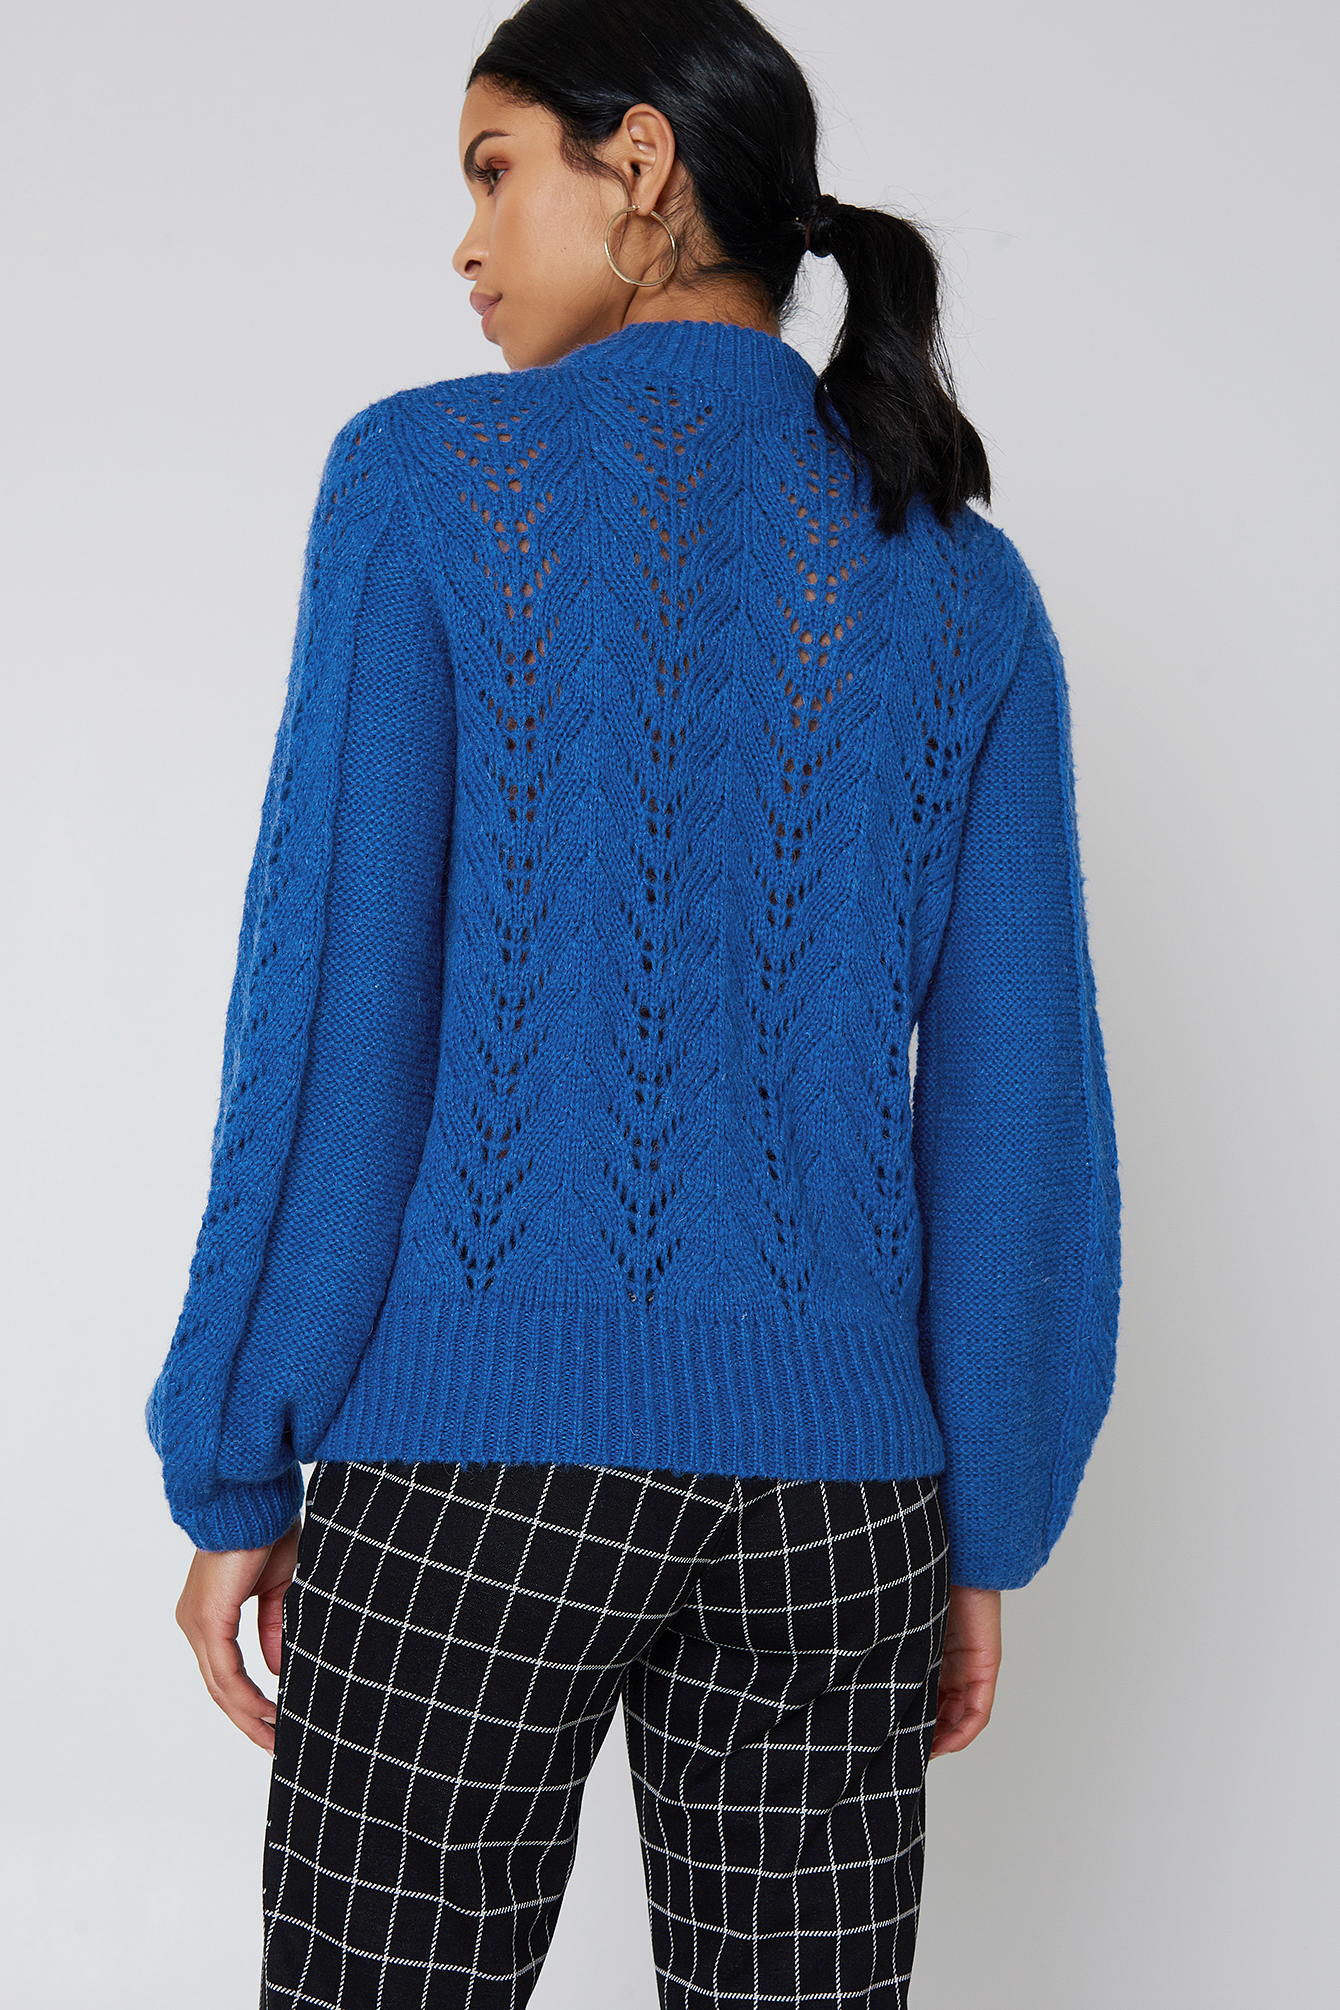 Cobolt Knitwear Sweater